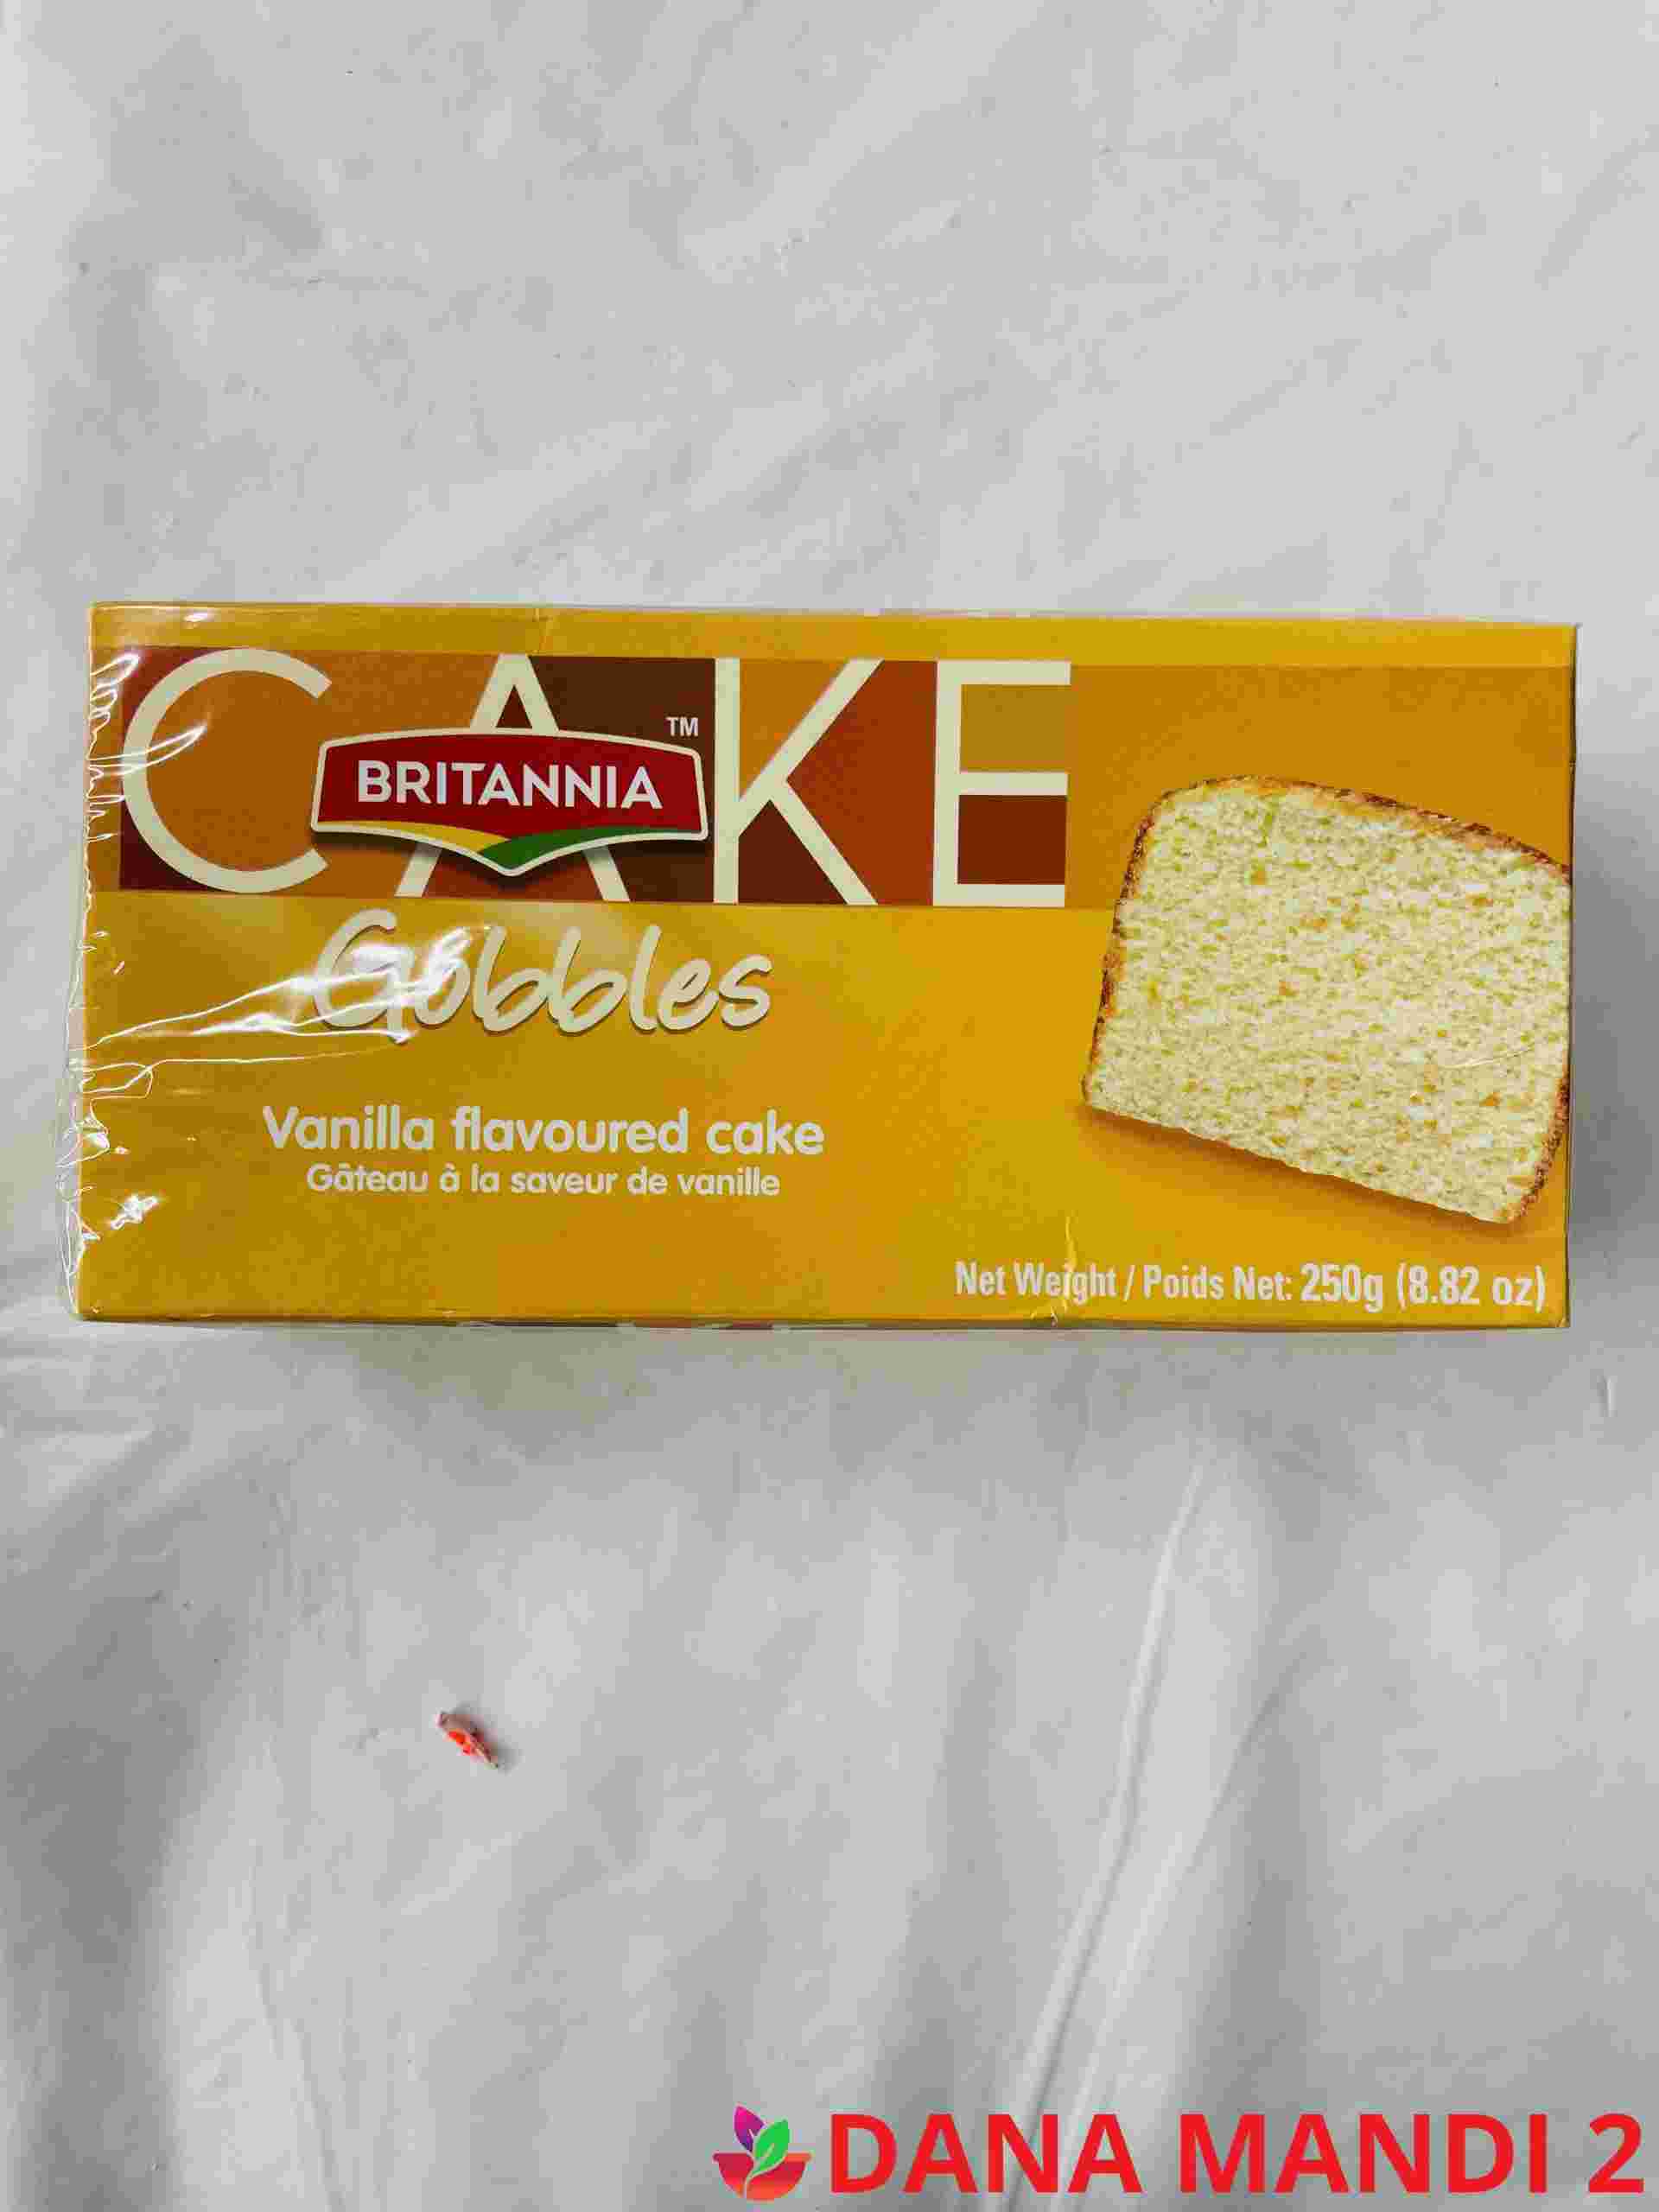 Britannia Gobbles Vanilla Flavoured Cake